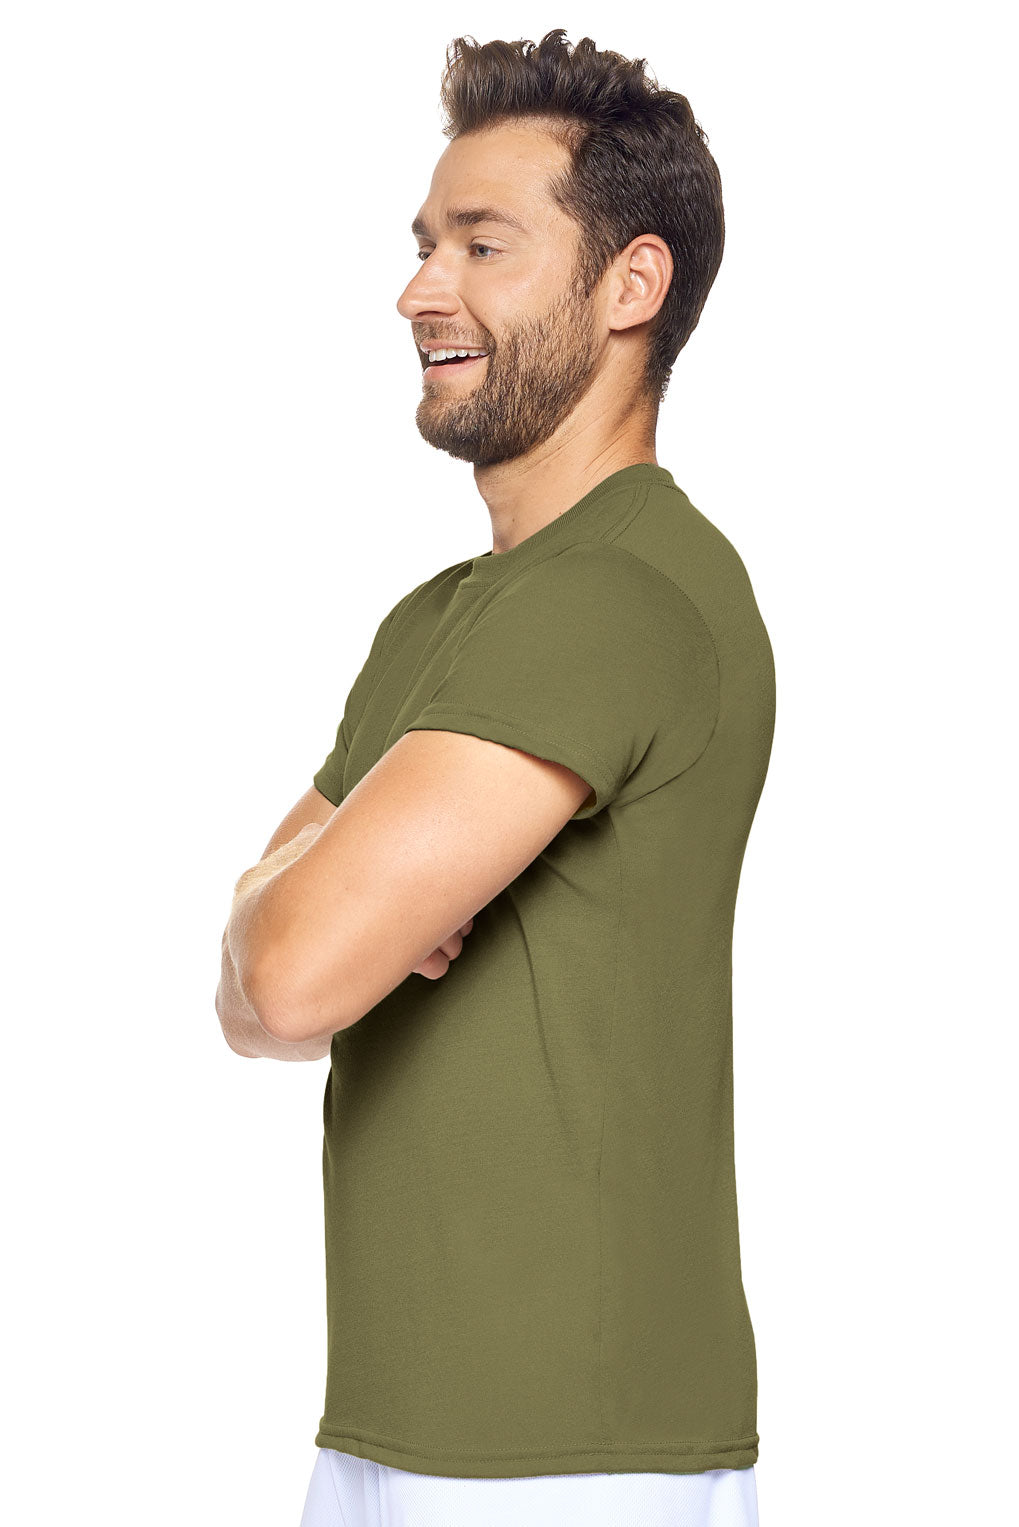 PT808🇺🇸 In The Field T-Shirt - Expert Brand#tan-499